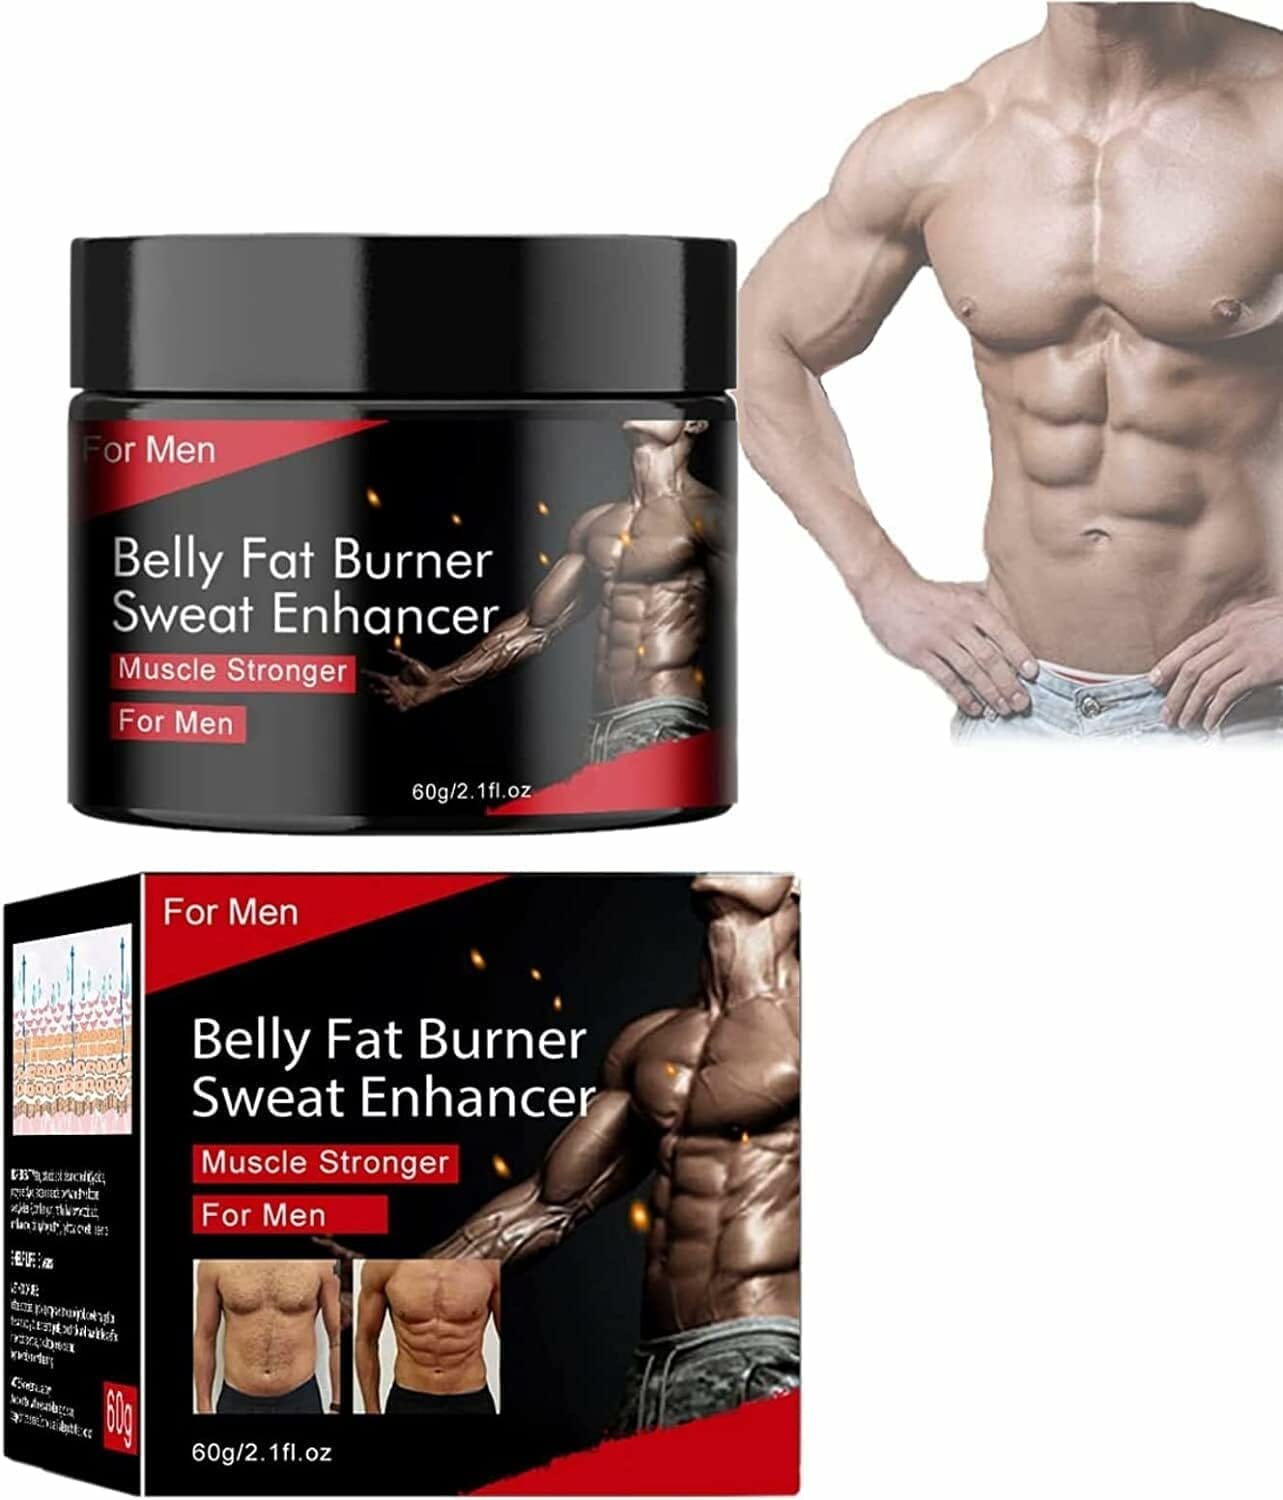 joiefiex fullbody muscle enhancer creamsculptique abs sculpting creamworkout cream to burn fatmuscle growth enhancement 1